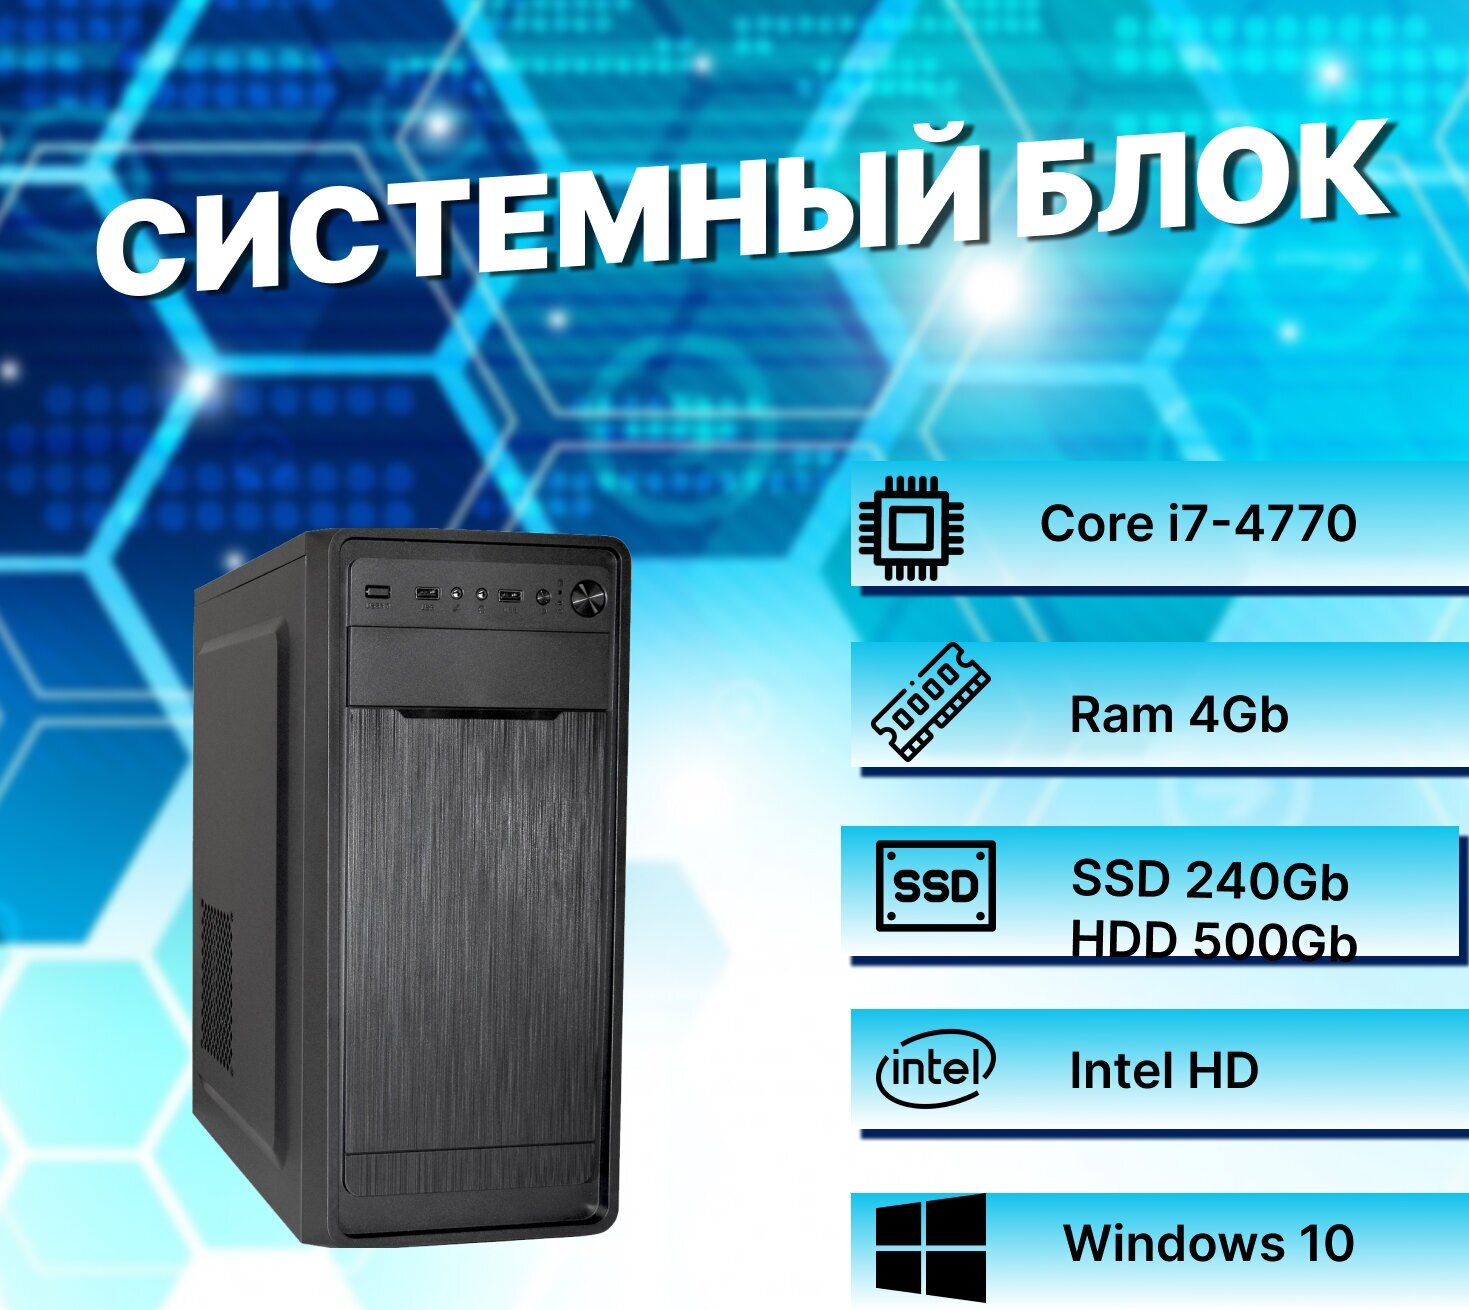 Системный блок Intel Core i7-4770 (3.4ГГц)/ RAM 4Gb/ SSD 240Gb/ HDD 500Gb/ Intel HD/ Windows 10 Pro